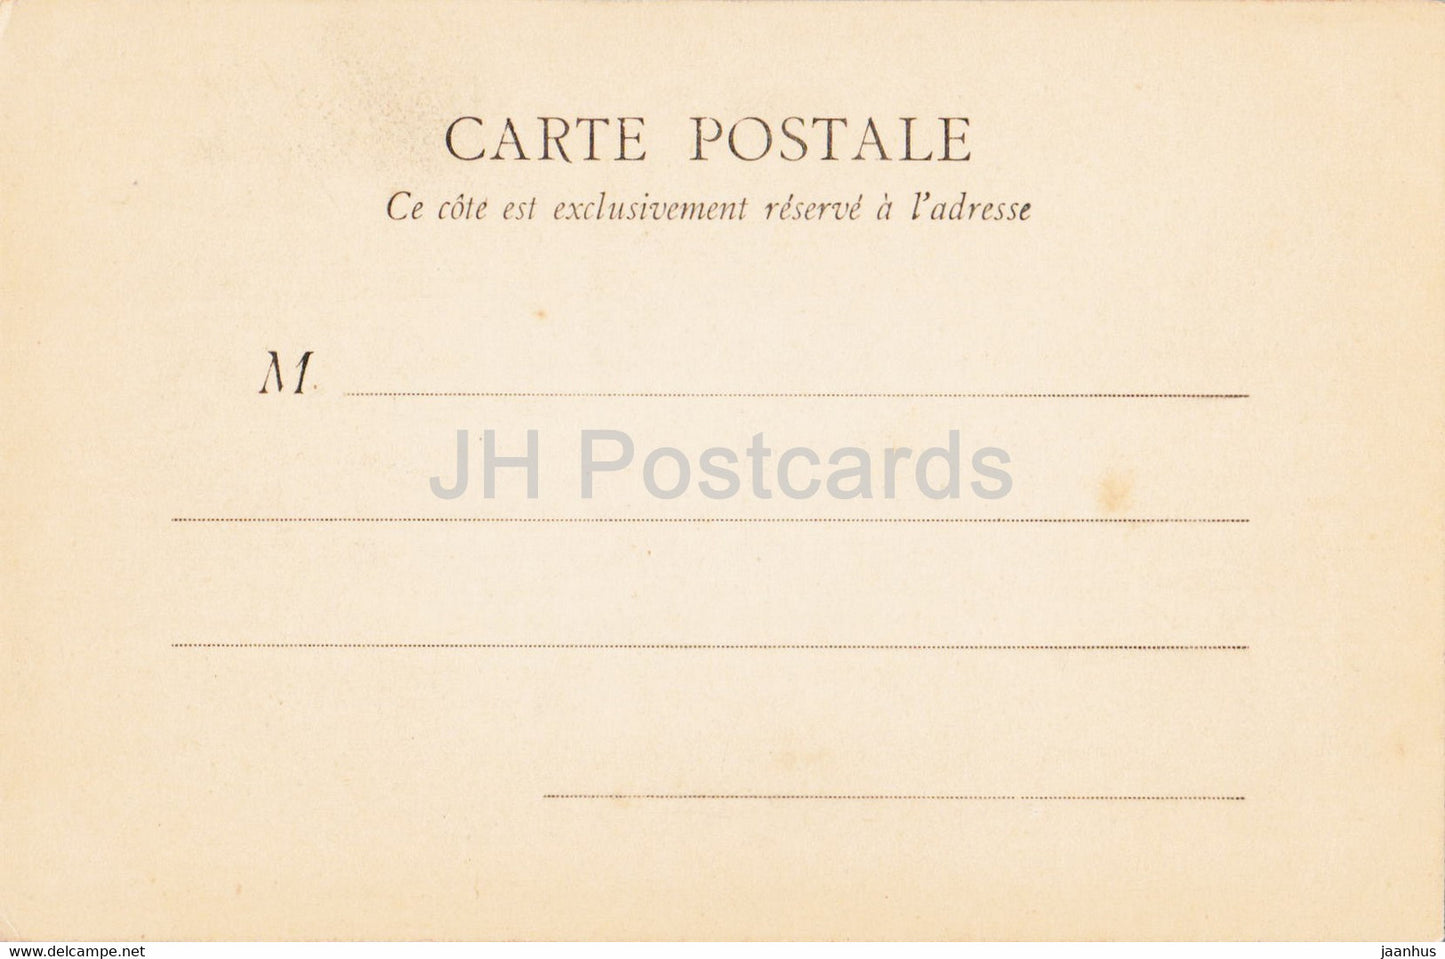 Fontainebleau - Chapelle de la Trinite - old postcard - France - unused